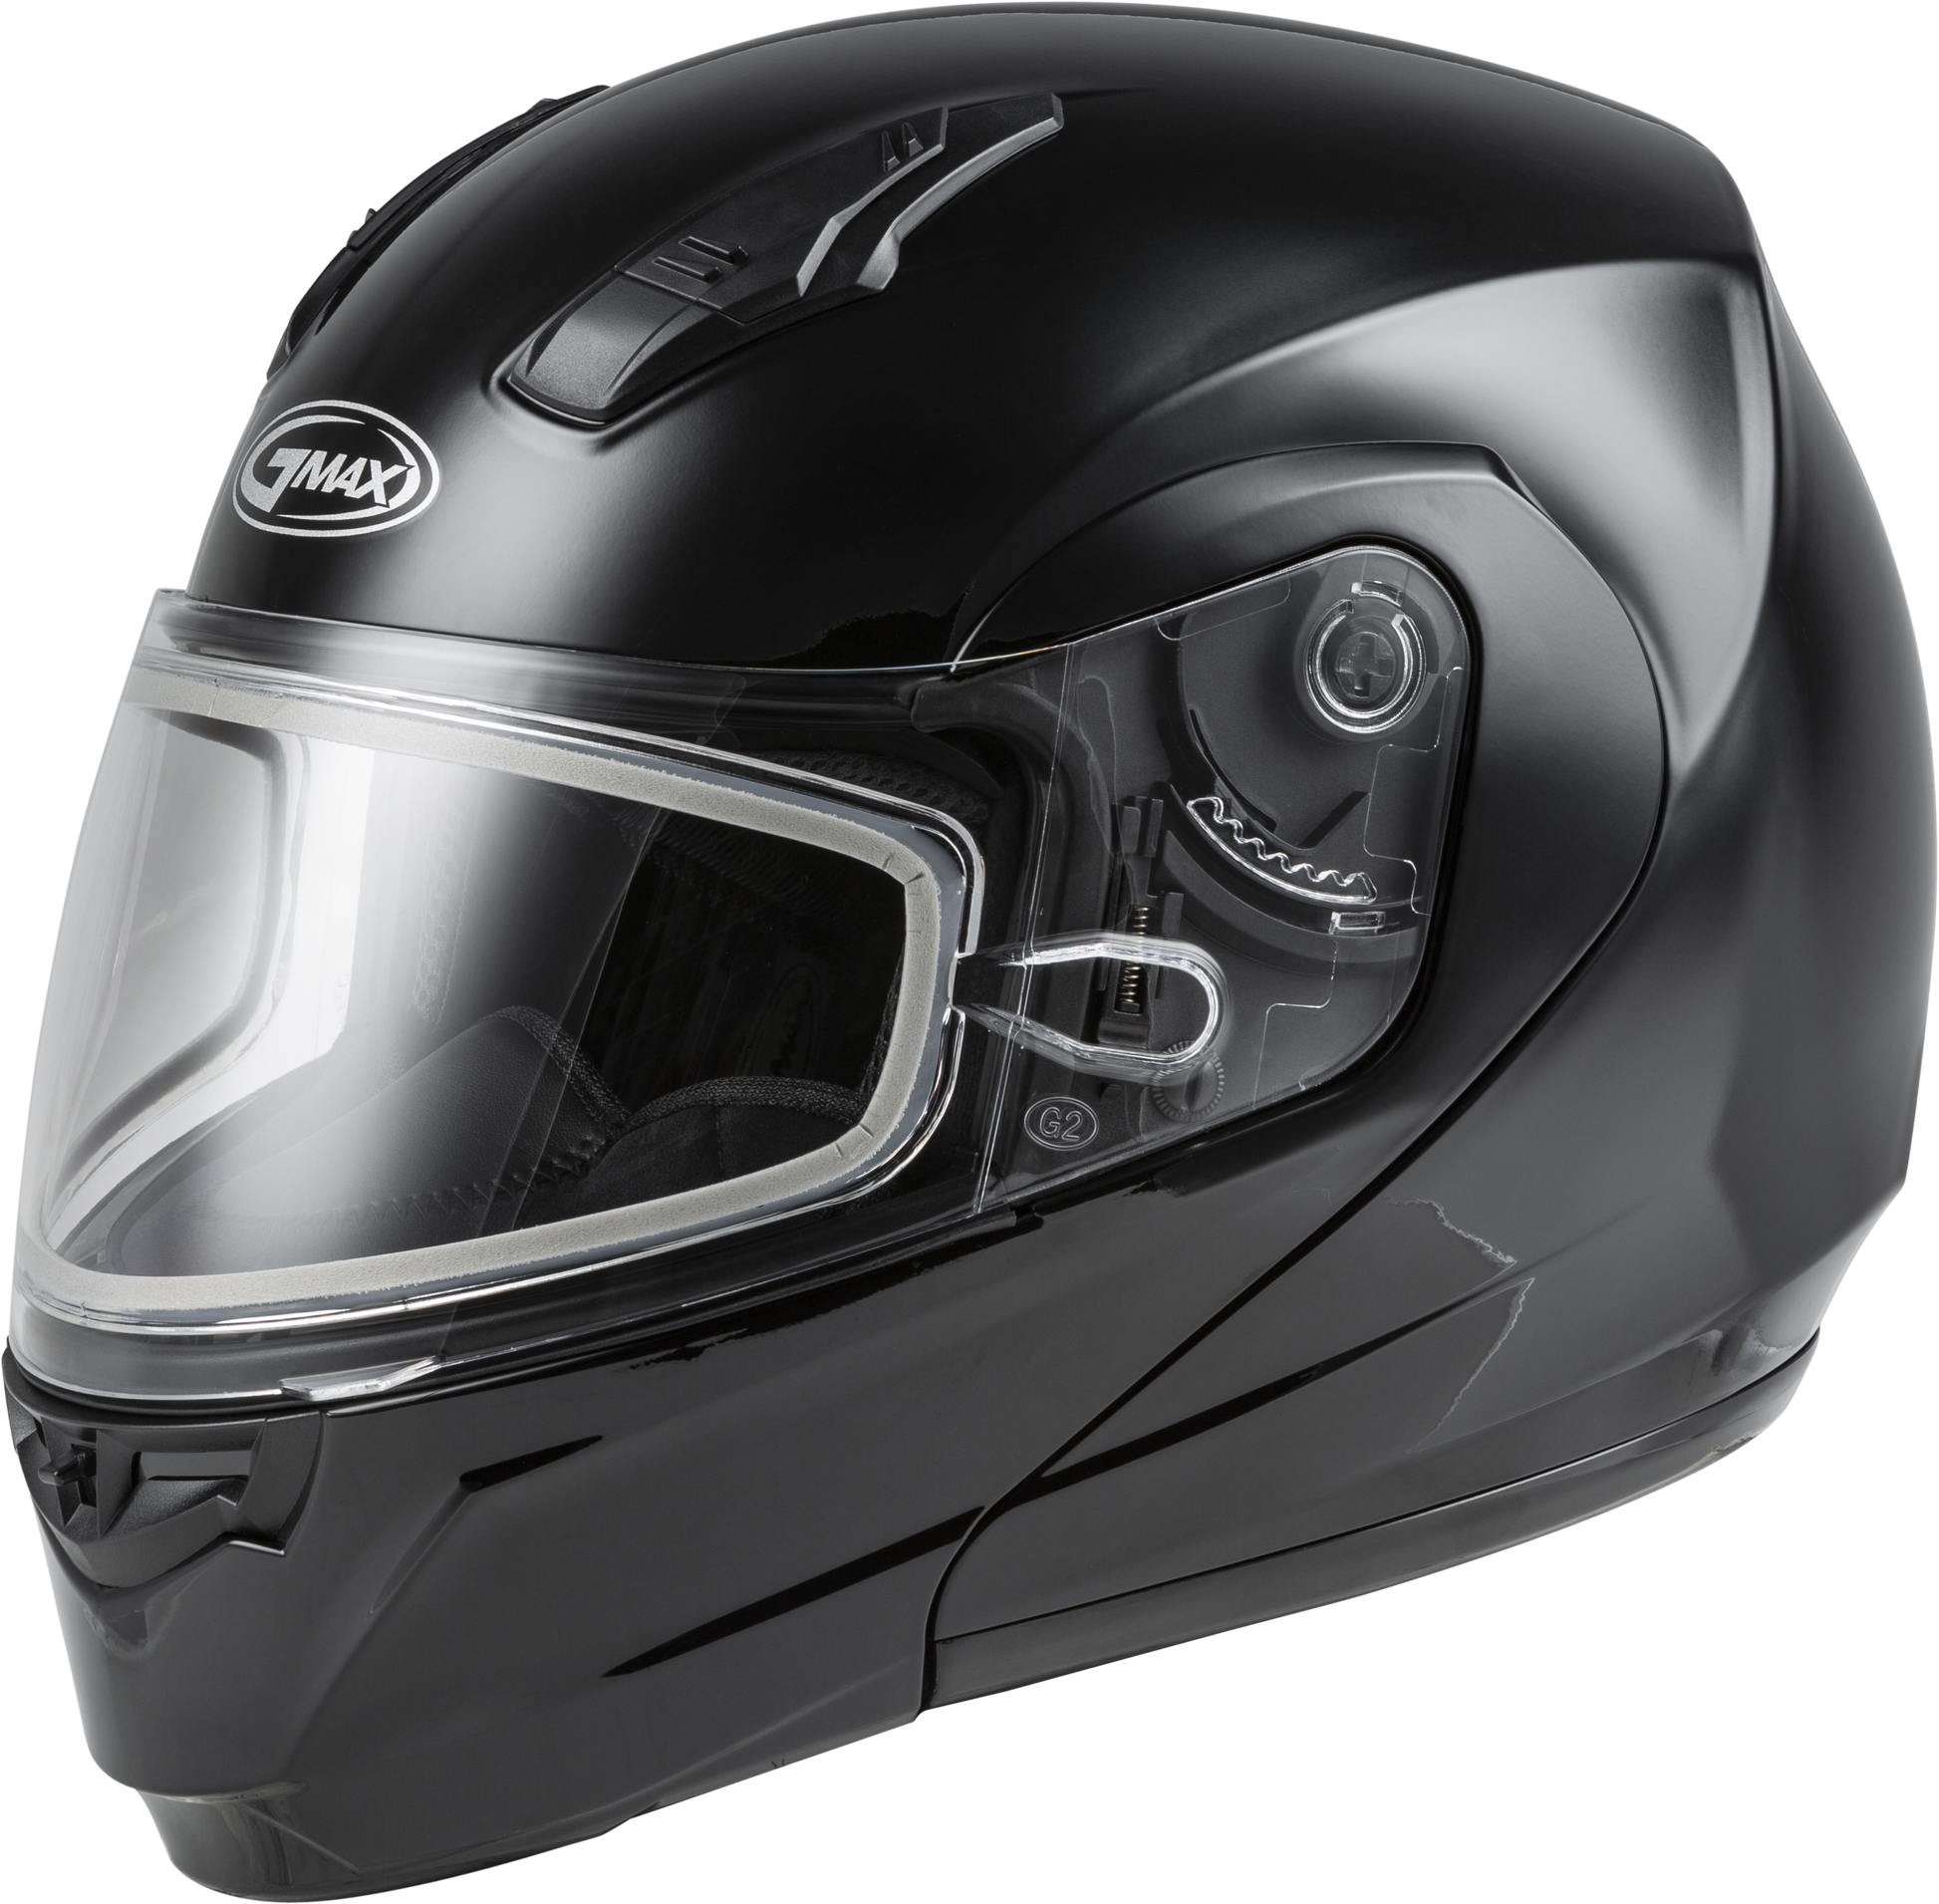 Gmax 72-5902 MD-04S Modular Snow Helmet Black